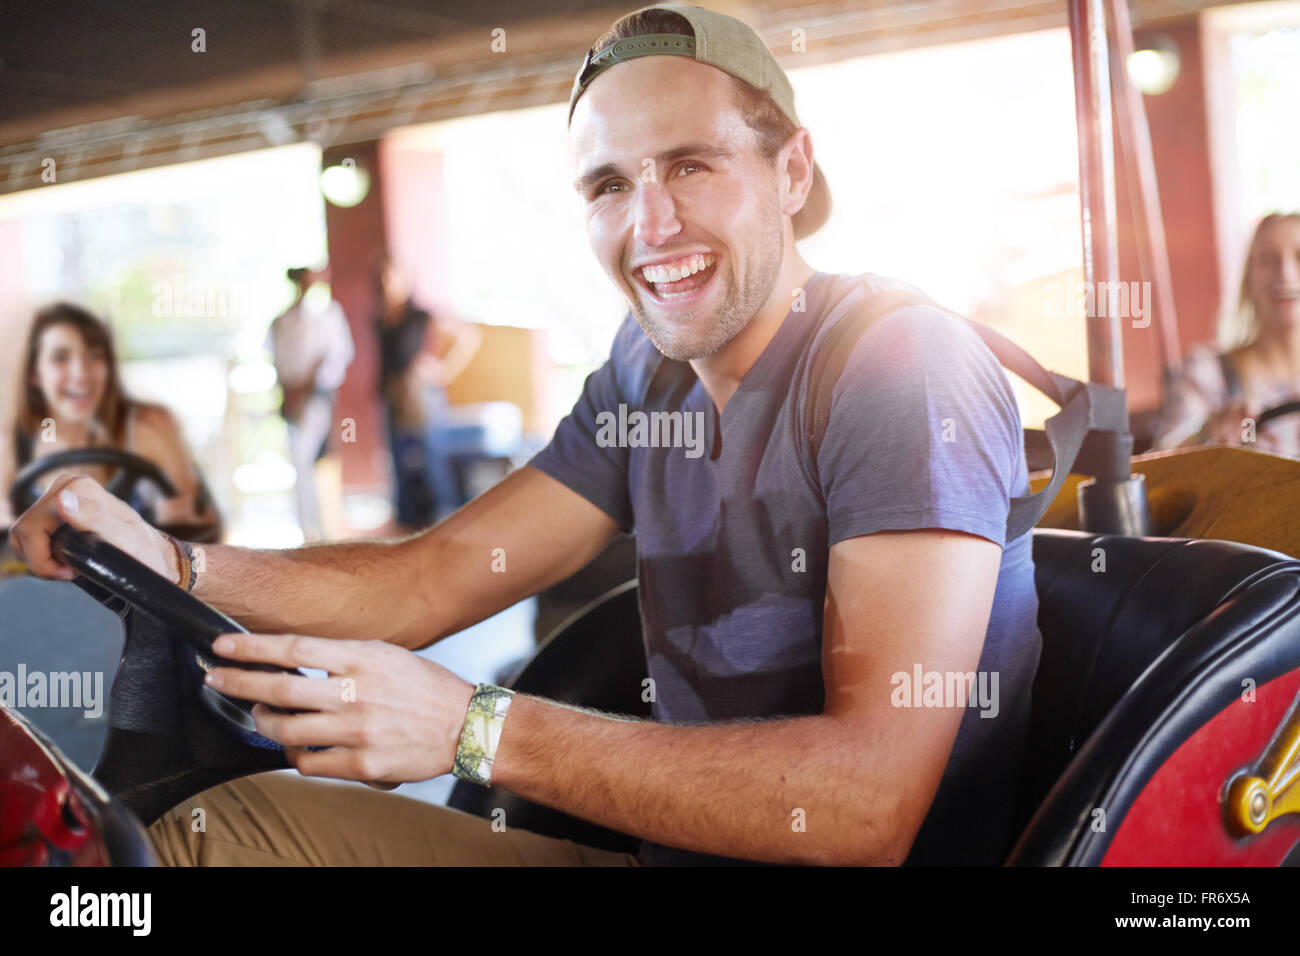 Laughing young man riding bumper cars at amusement park Stock Photo